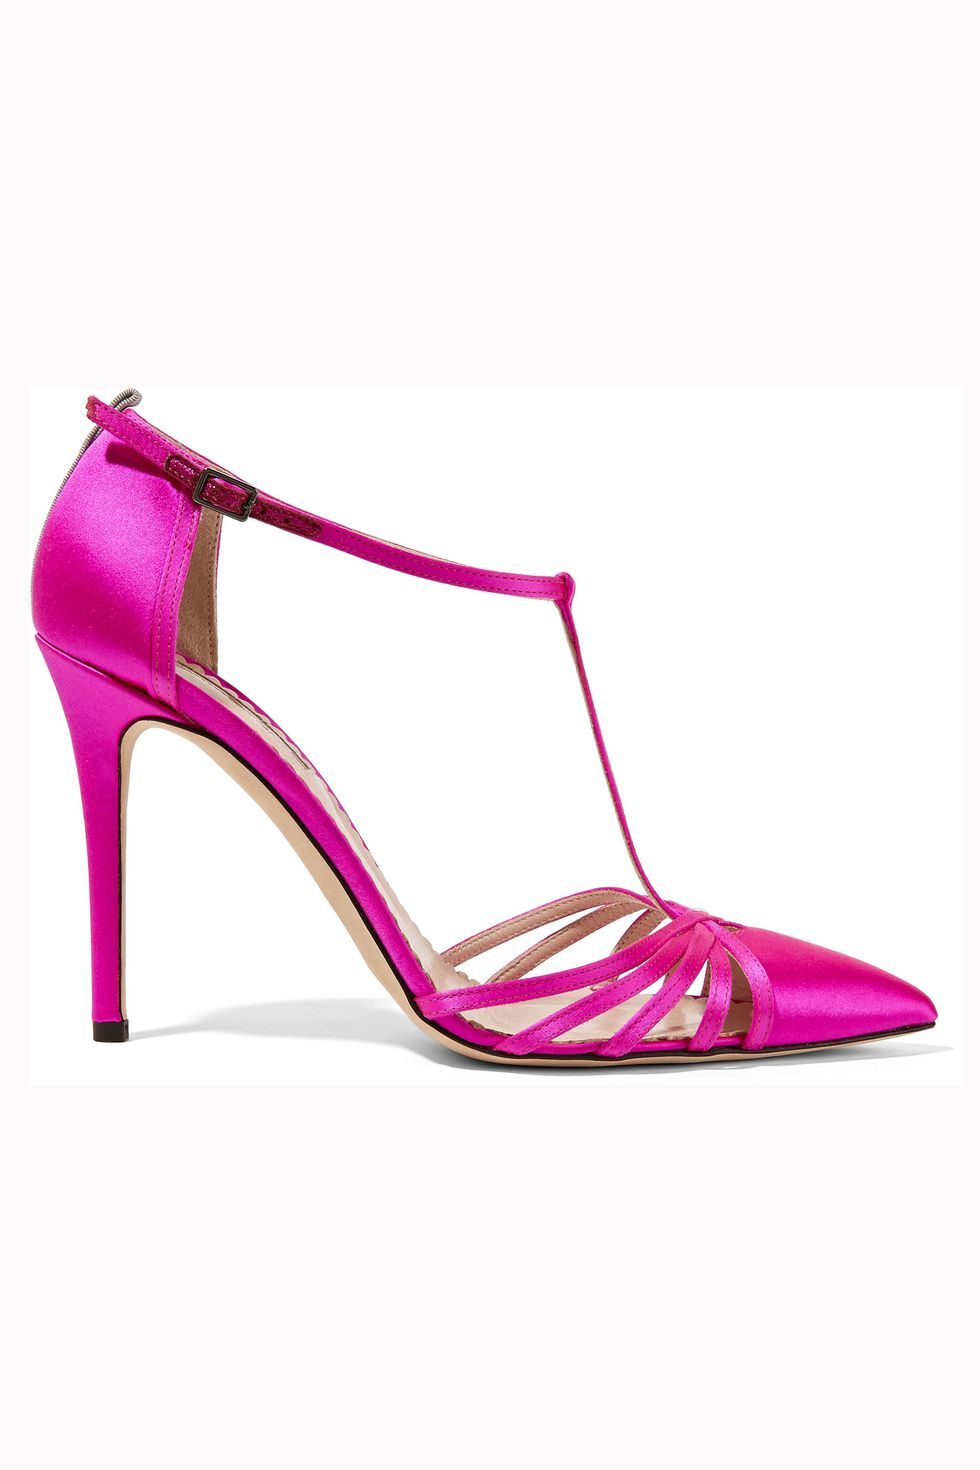 Footwear, Purple, Pink, Magenta, Fashion, High heels, Beige, Basic pump, Fashion design, Leather, 